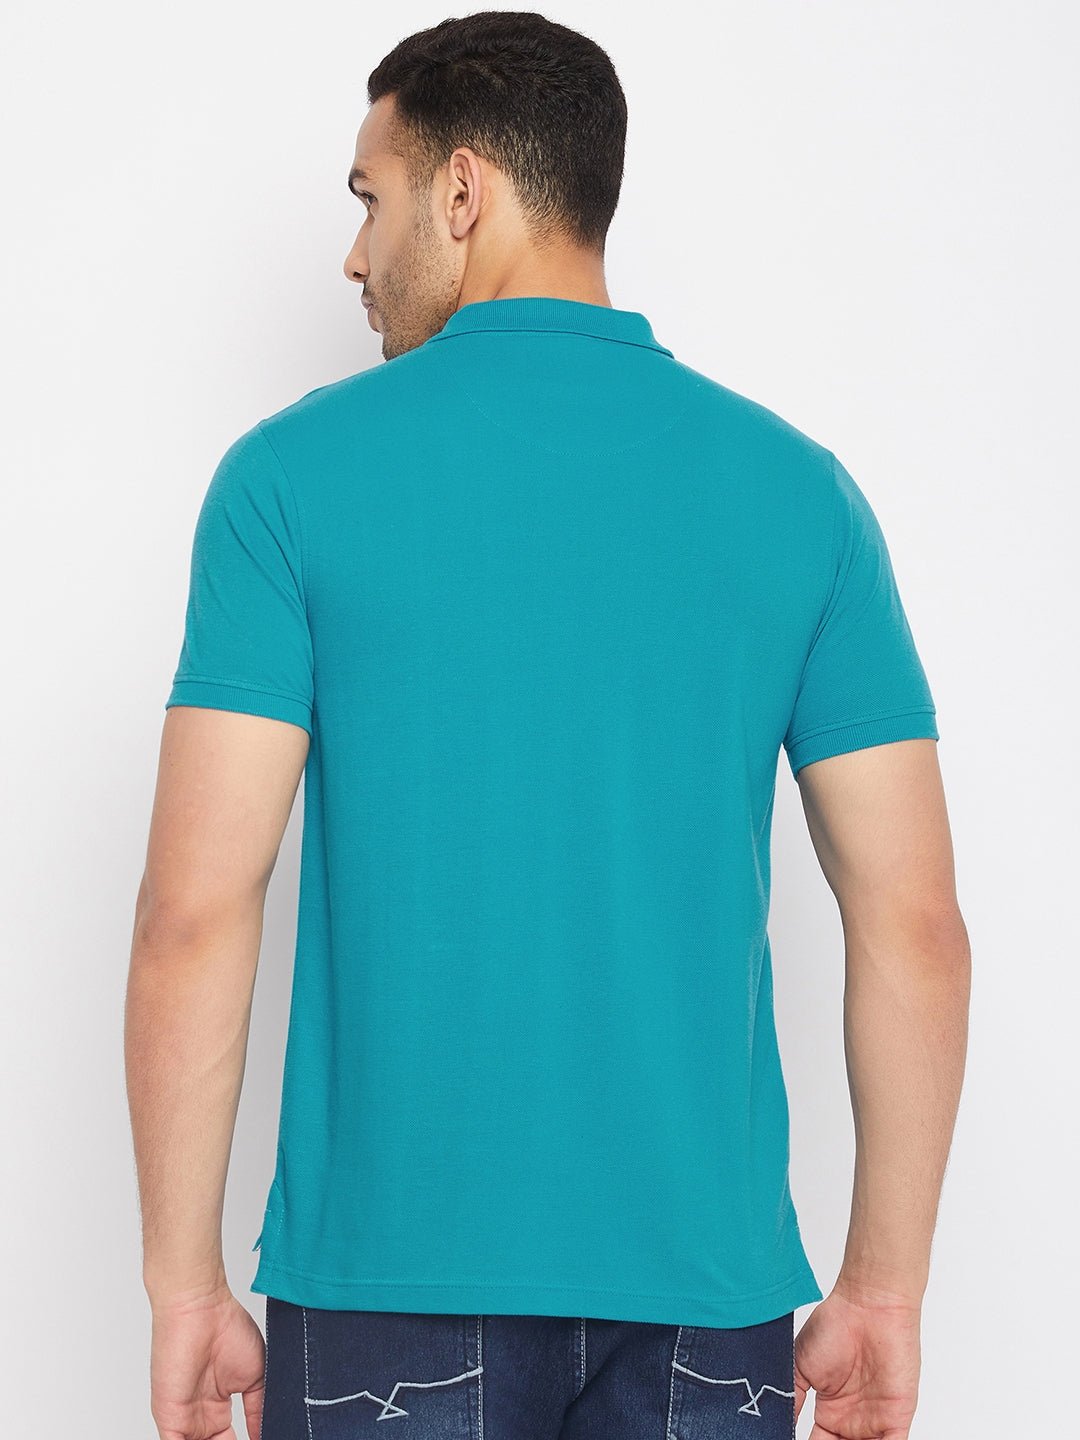 Blue Polo T-Shirt - clubyork